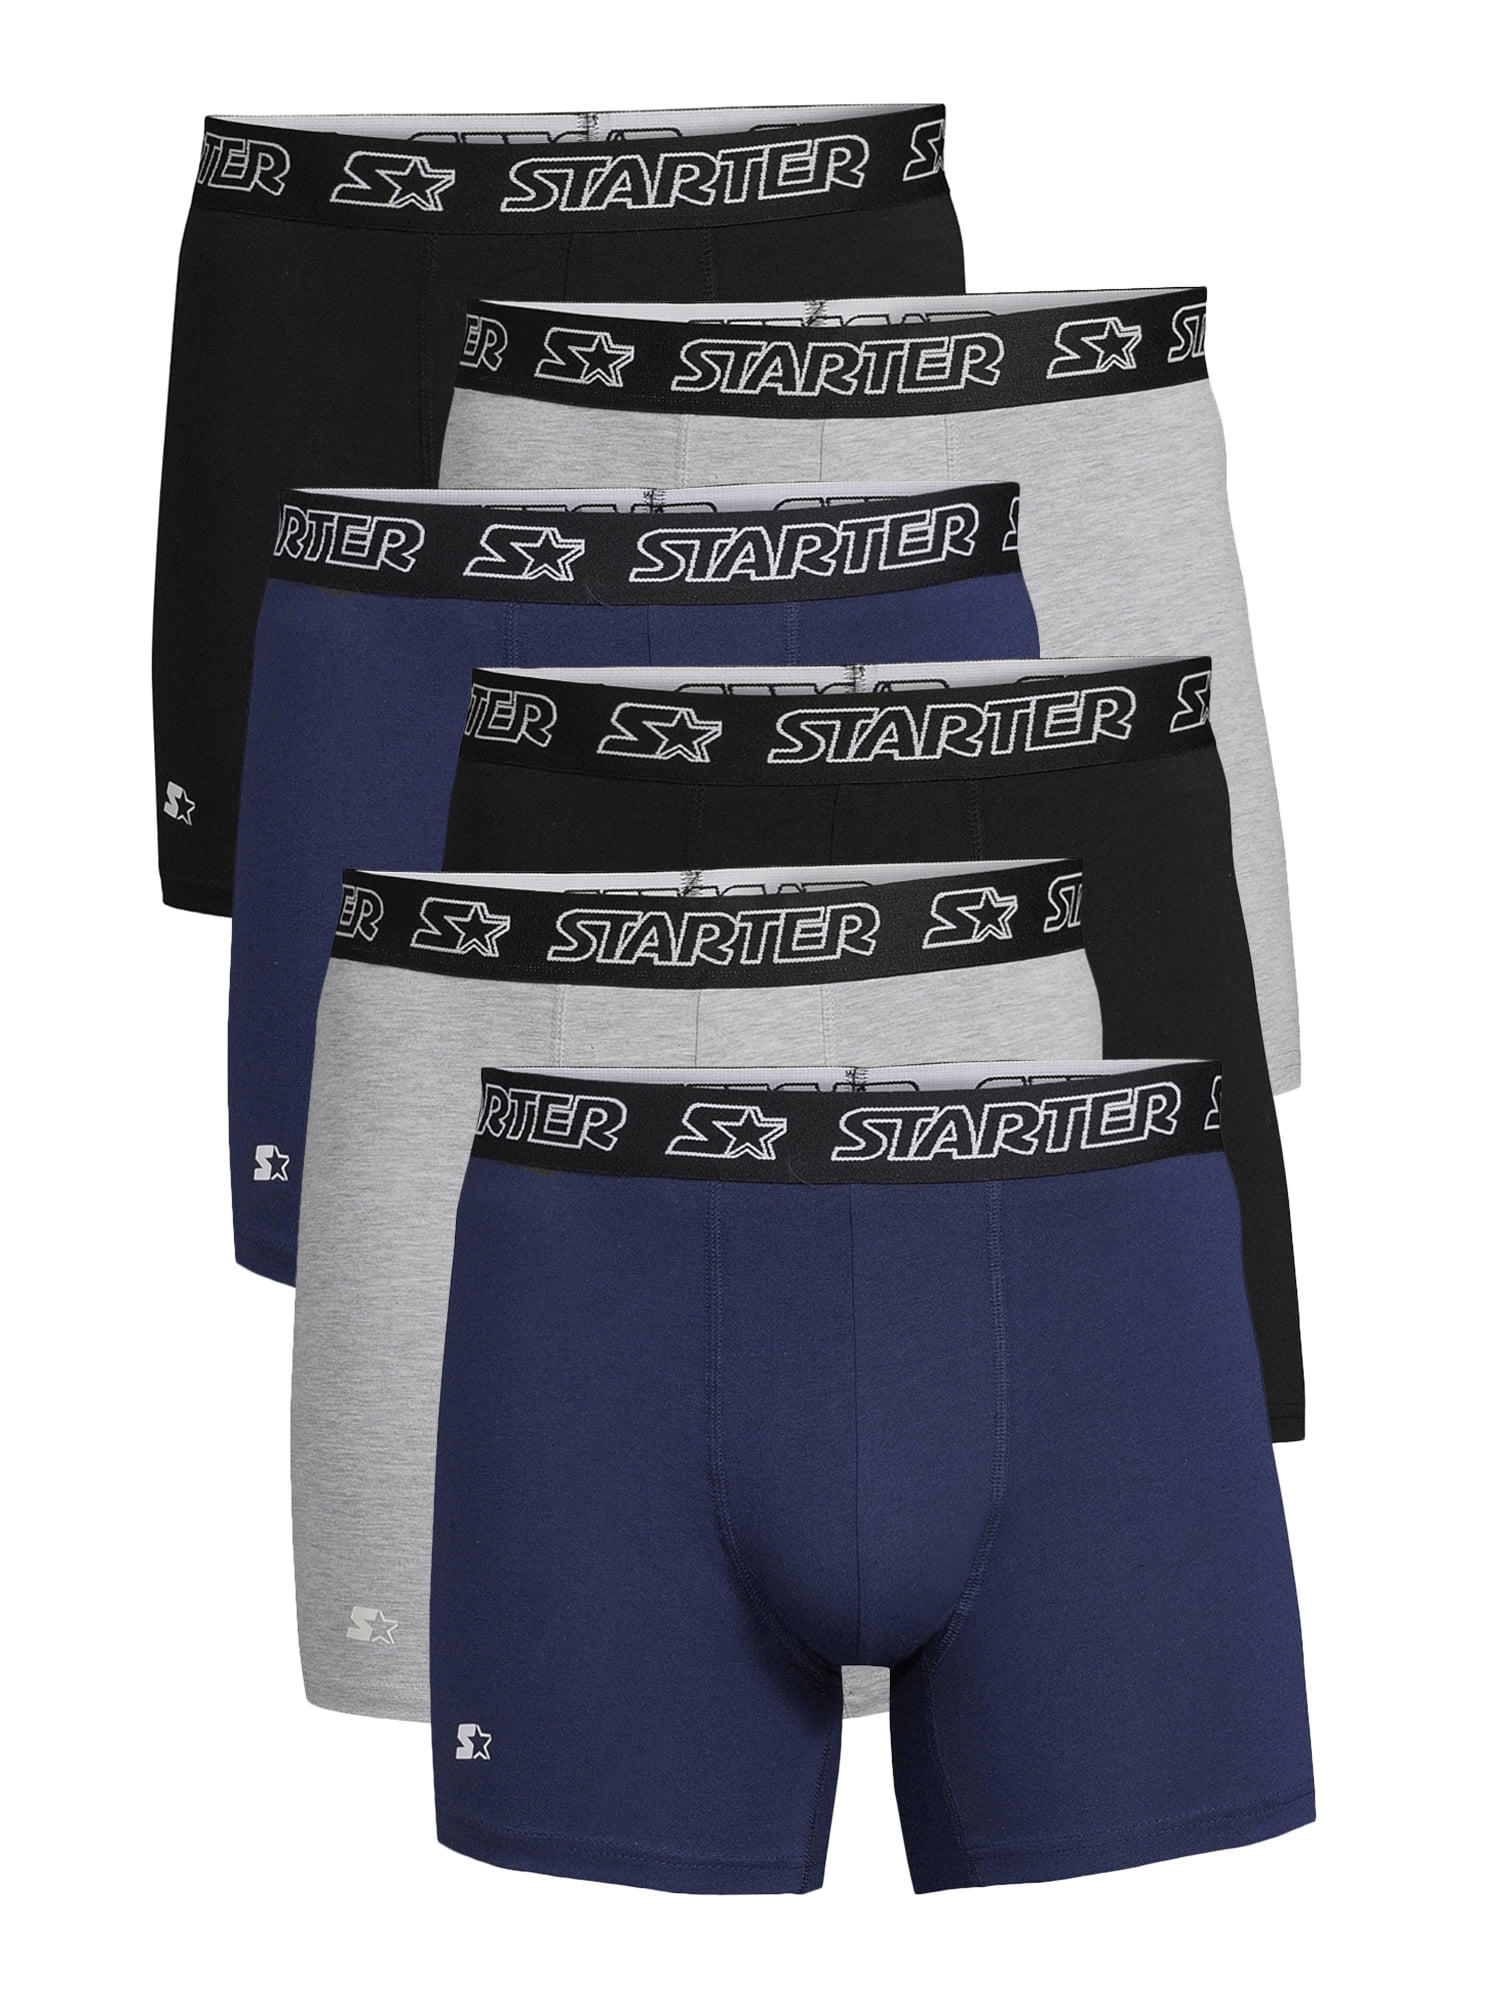 Starter Mens Boxer Briefs Breathable Cotton Underwear Pack, 6-Pack ...